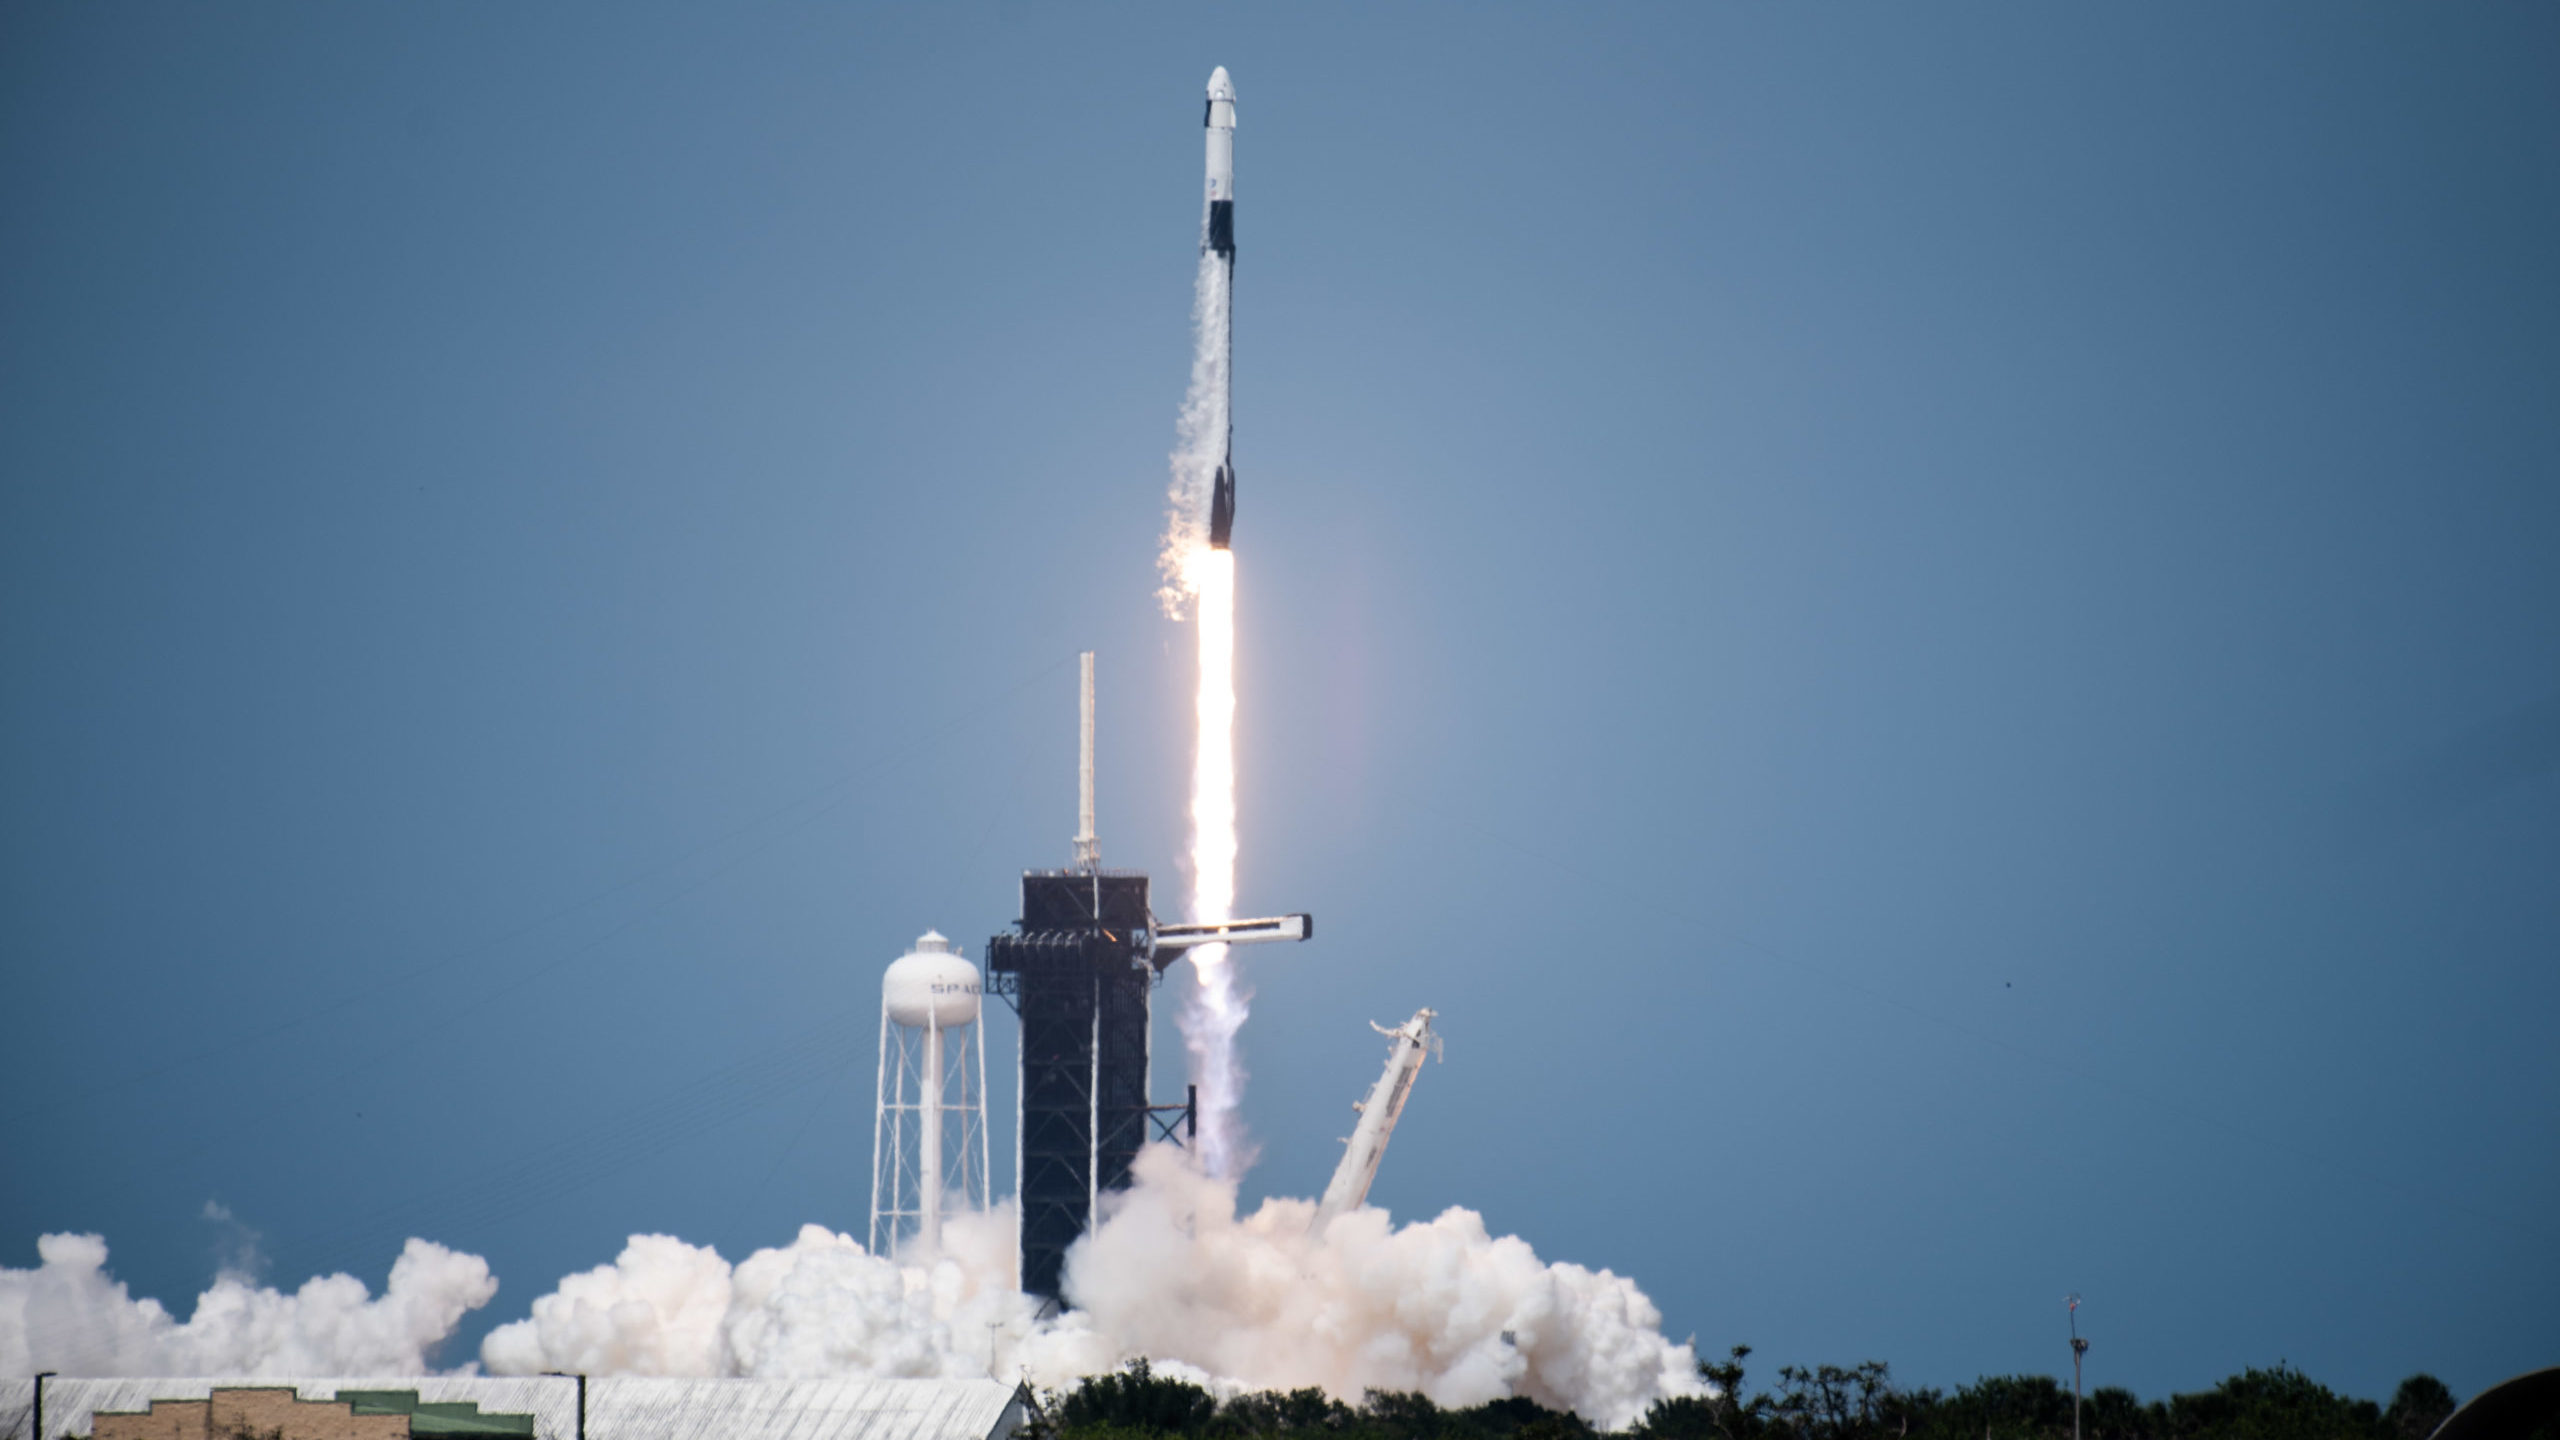 Elon Musk's SpaceX Demo-2 launch in May 2020. Image: Daniel Oberhaus (2020) (CC BY 2.0)